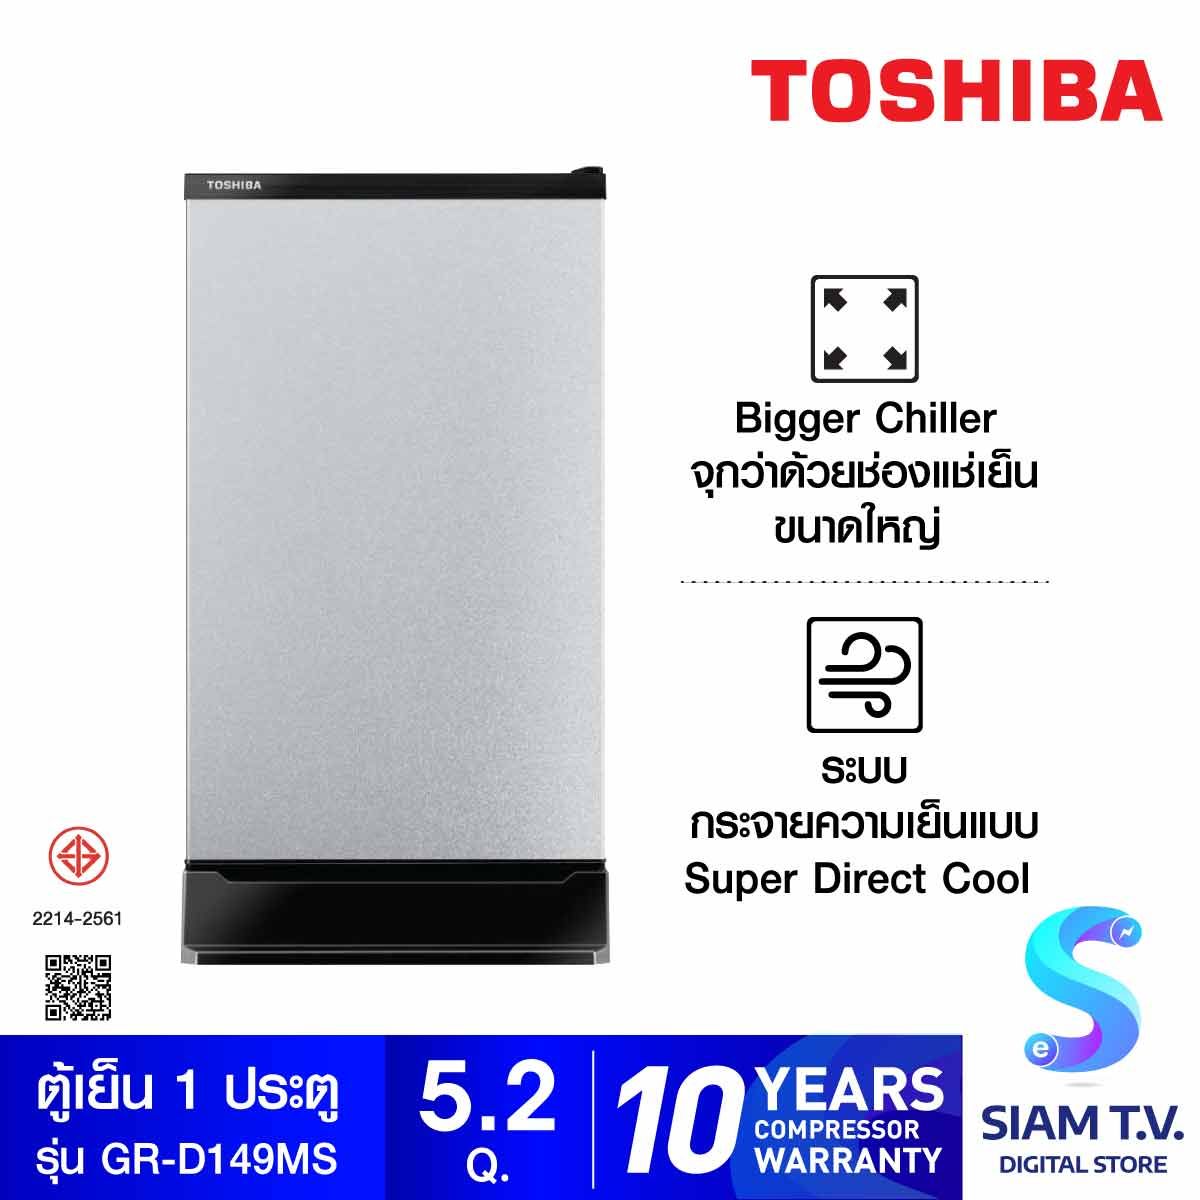 TOSHIBA ตู้เย็น 1 ประตู ขนาด 5.2 คิว สีเทา รุ่น GR-D149